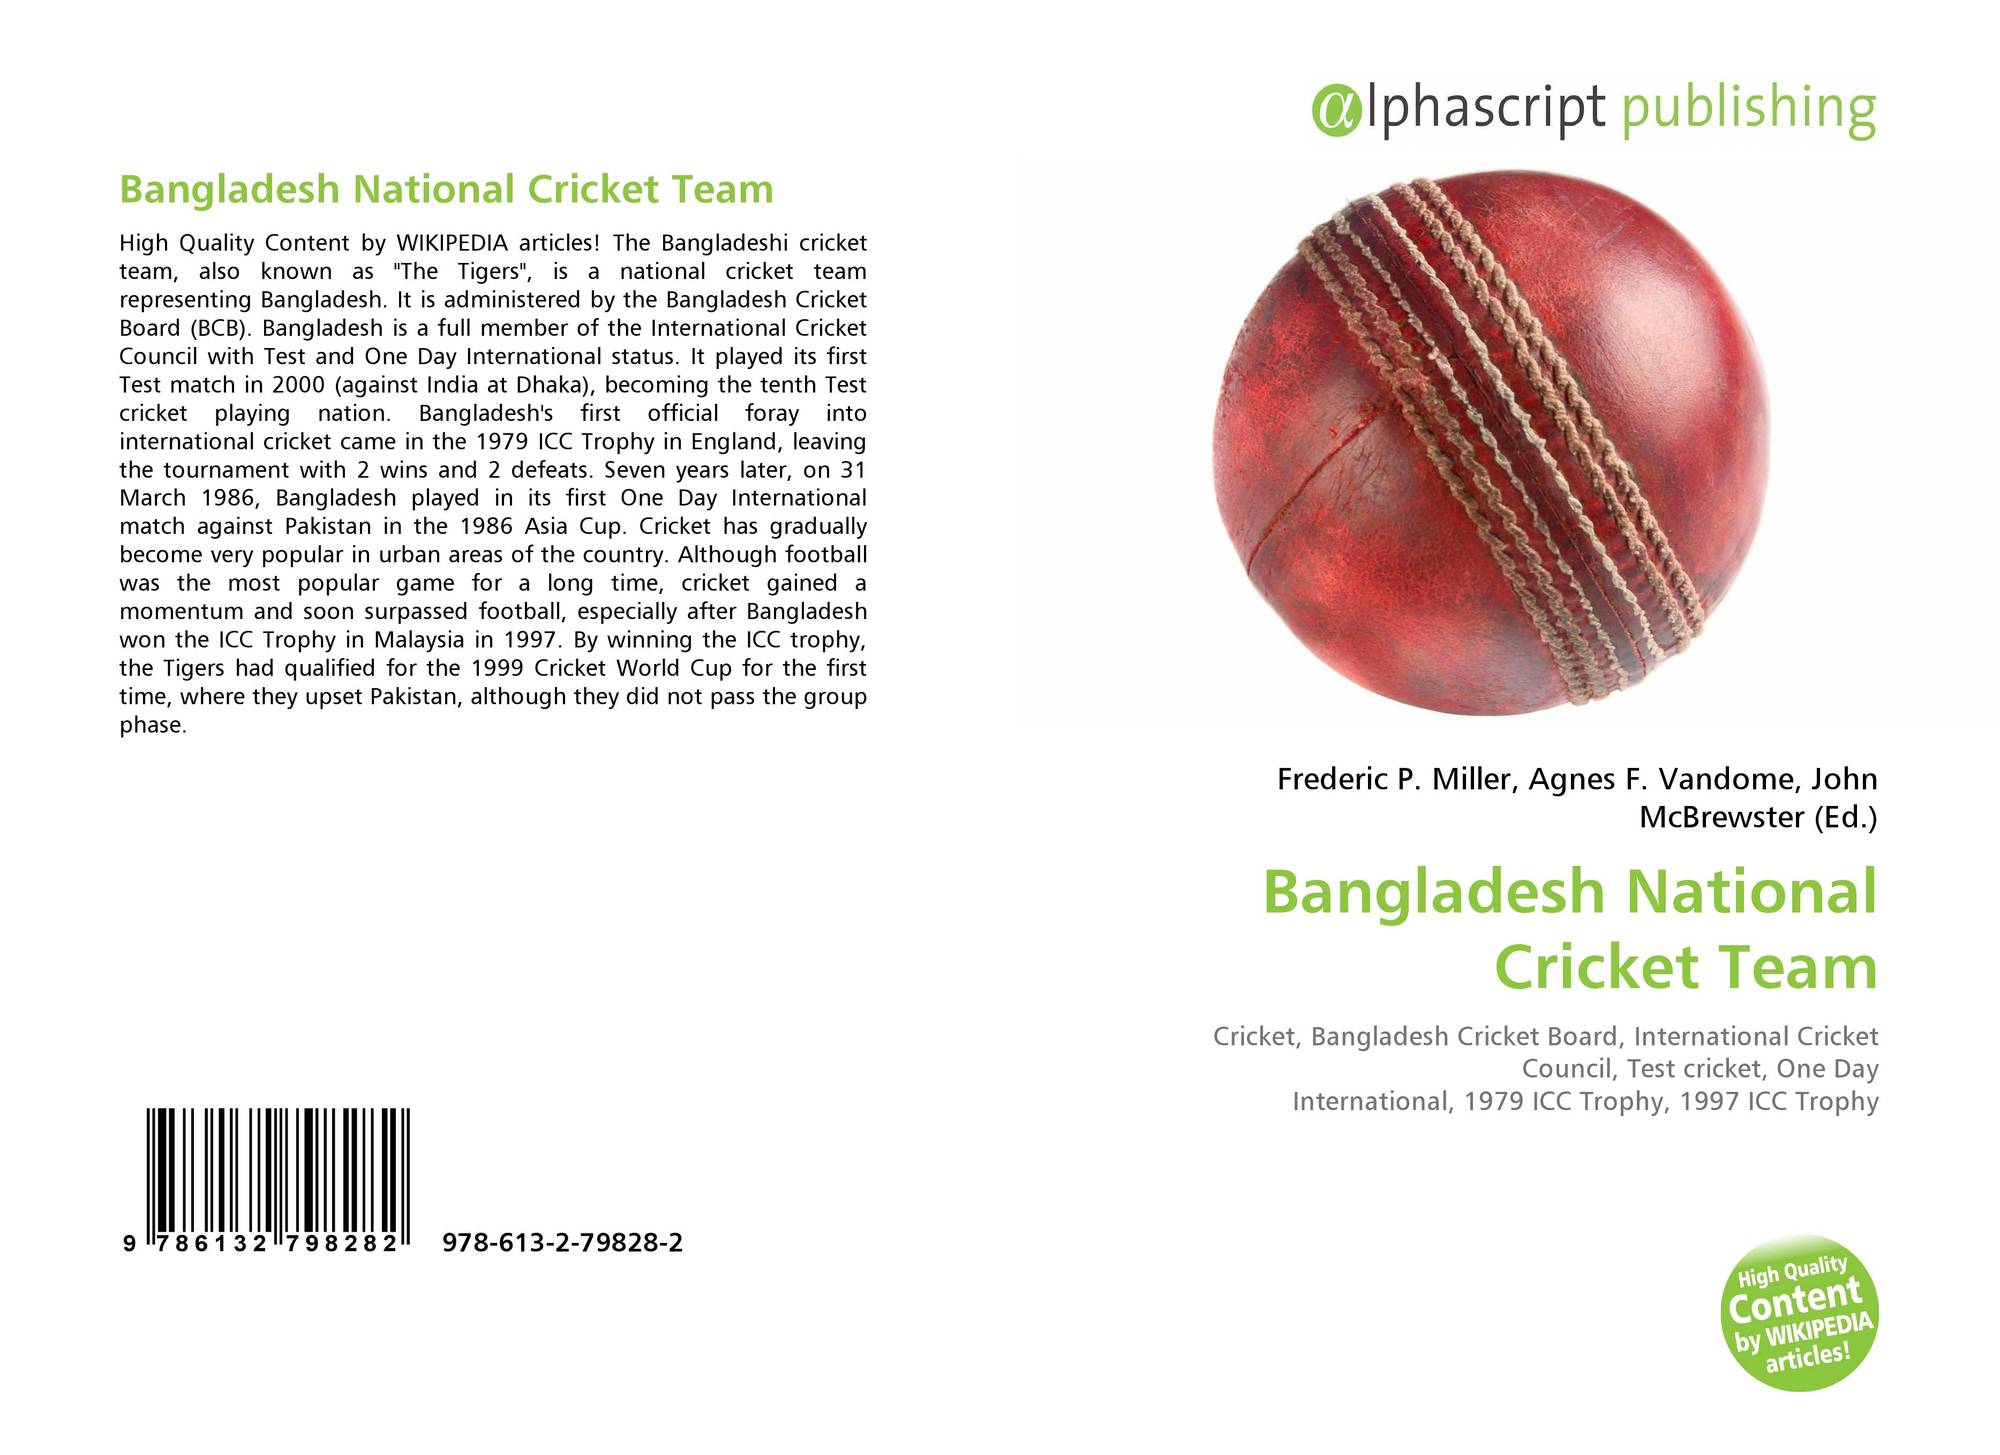 Bangladesh National Cricket Team 978 613 2 79828 2 6132798285 9786132798282